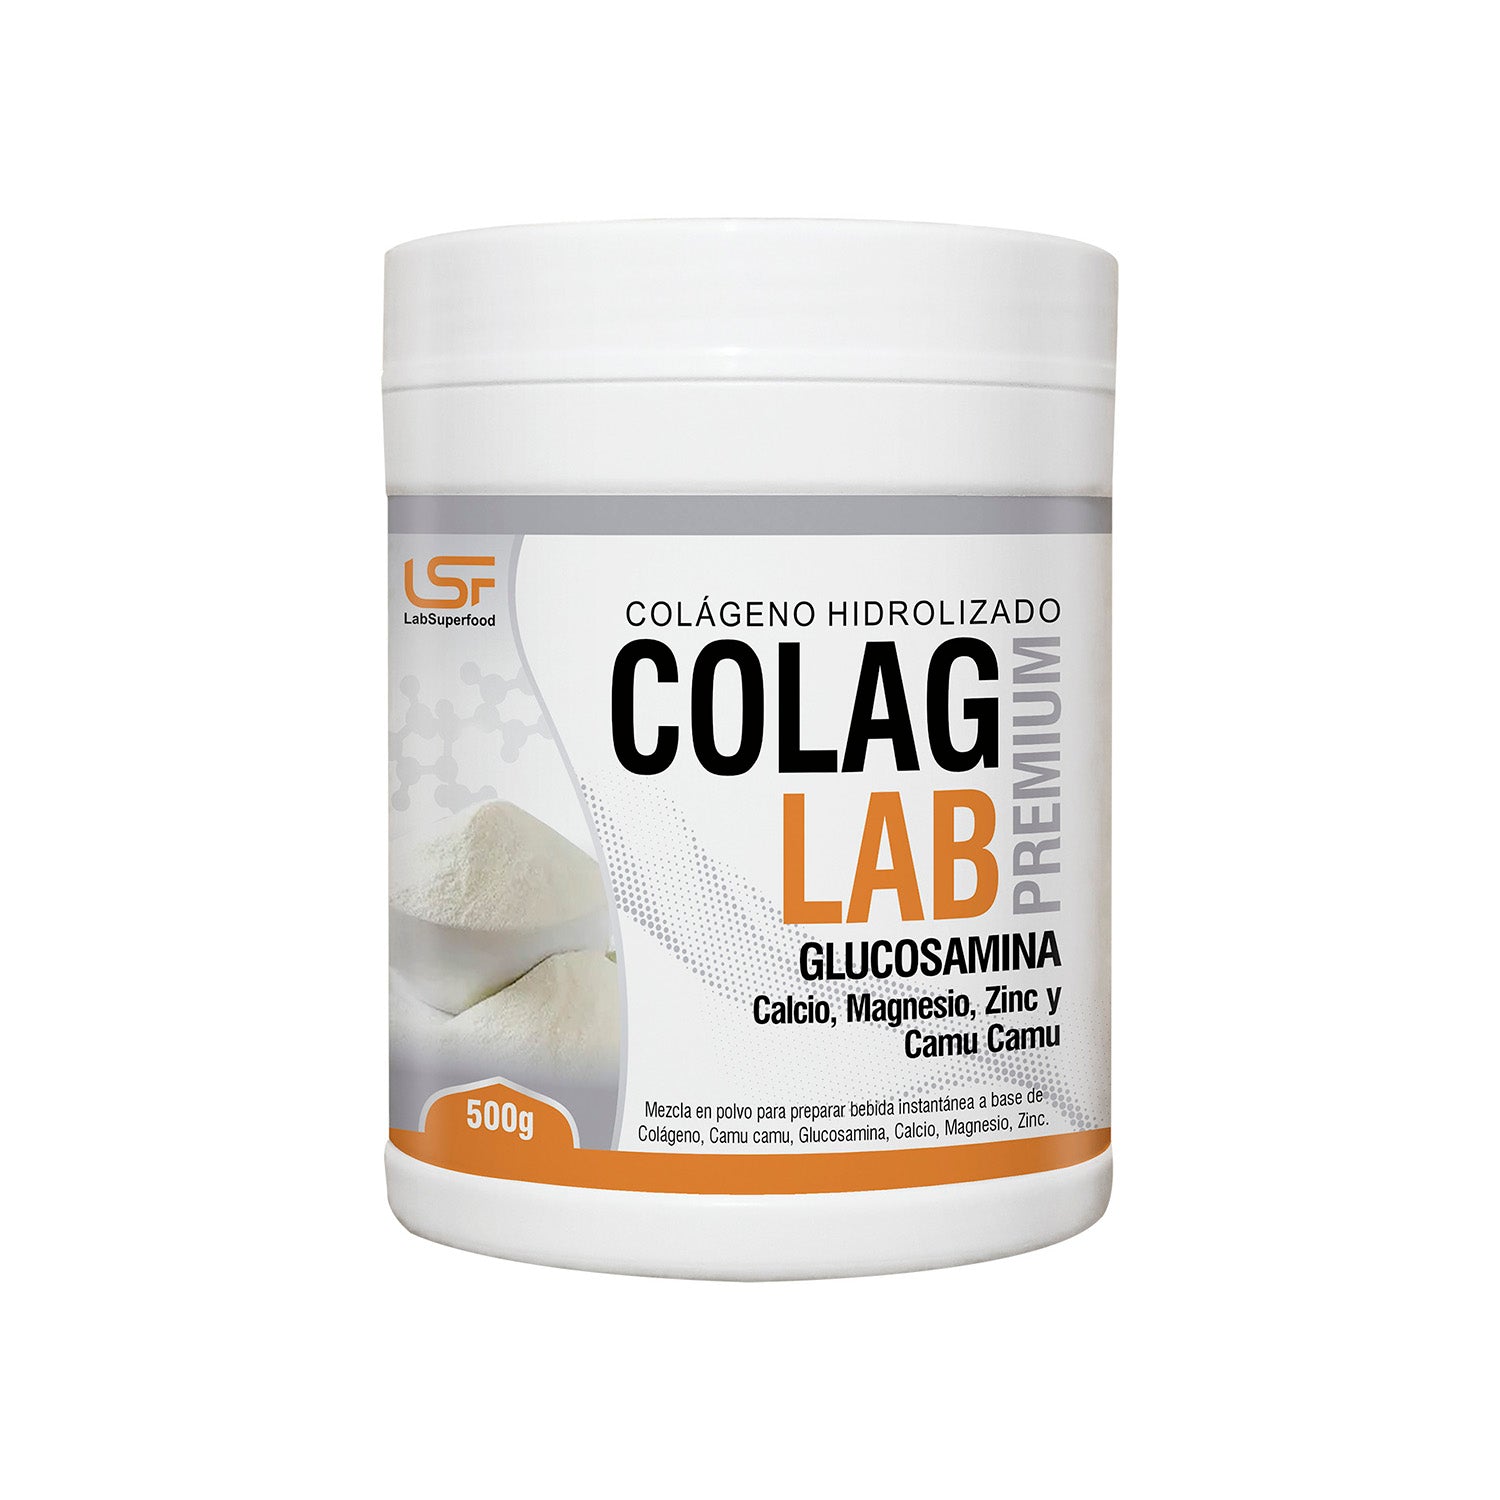 Colag Lab with Glucosamine - 500g